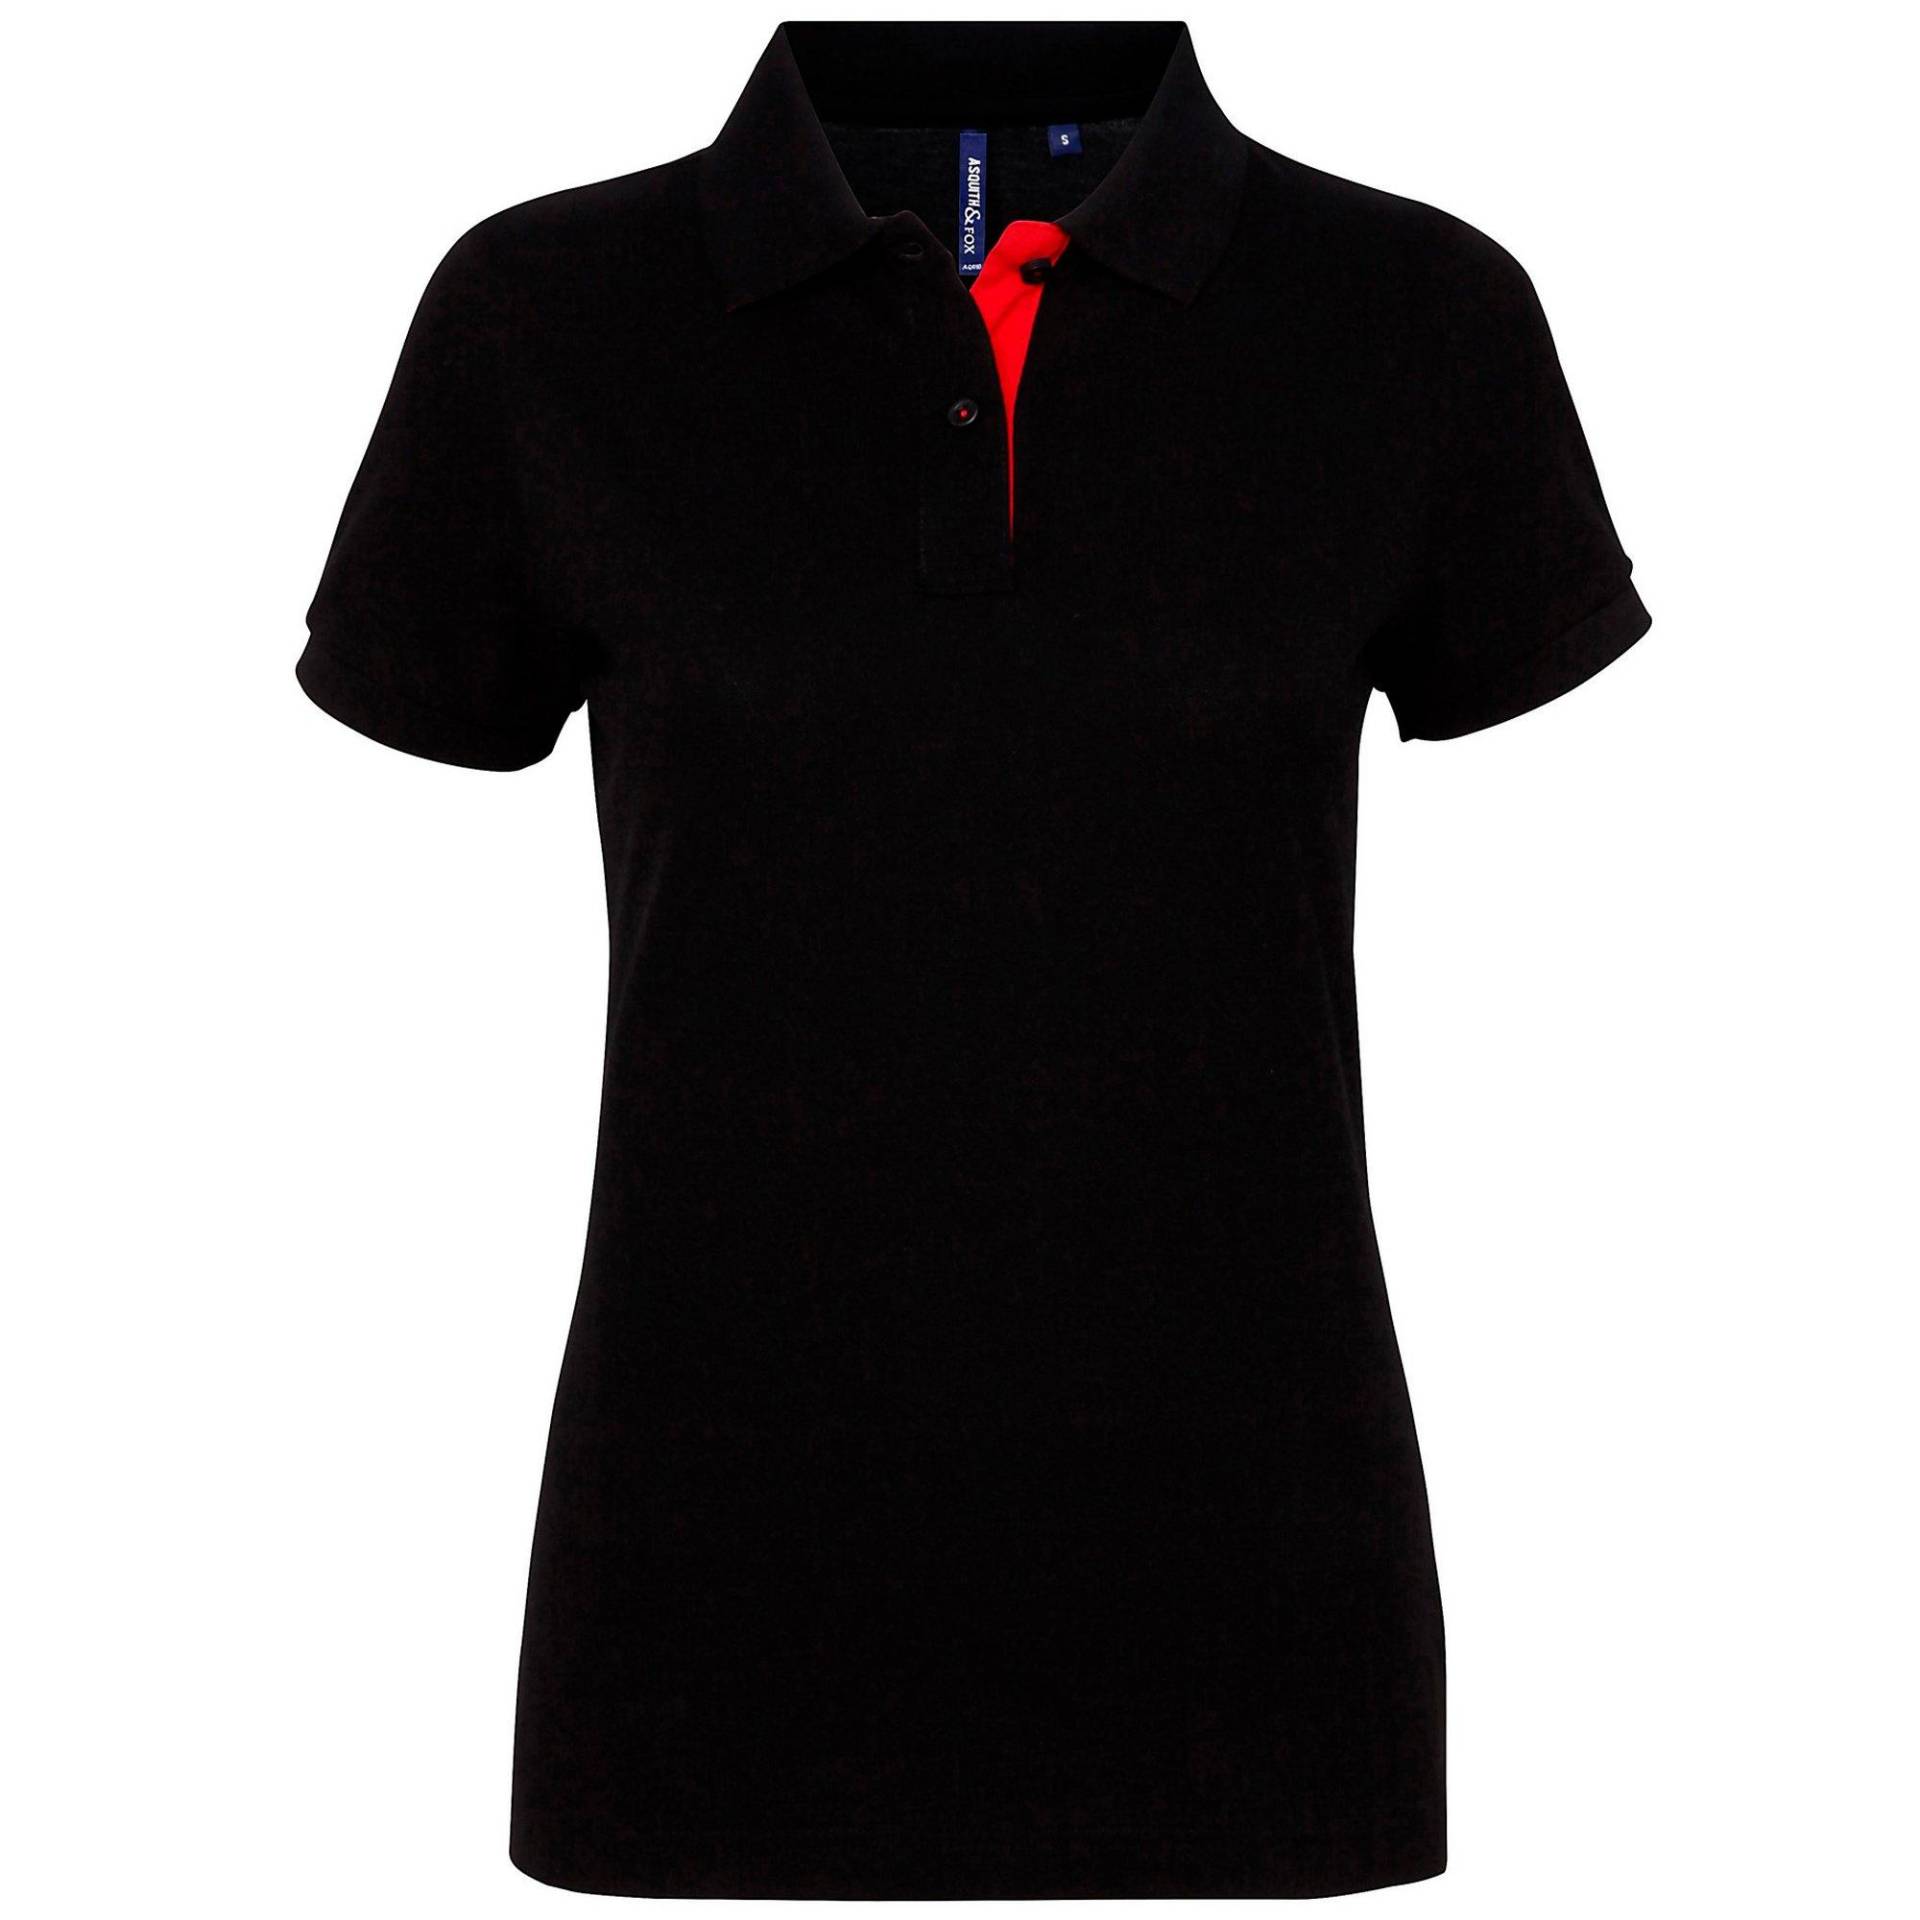 Kurzarm Kontrast Polo Shirt Damen Schwarz L von Asquith & Fox